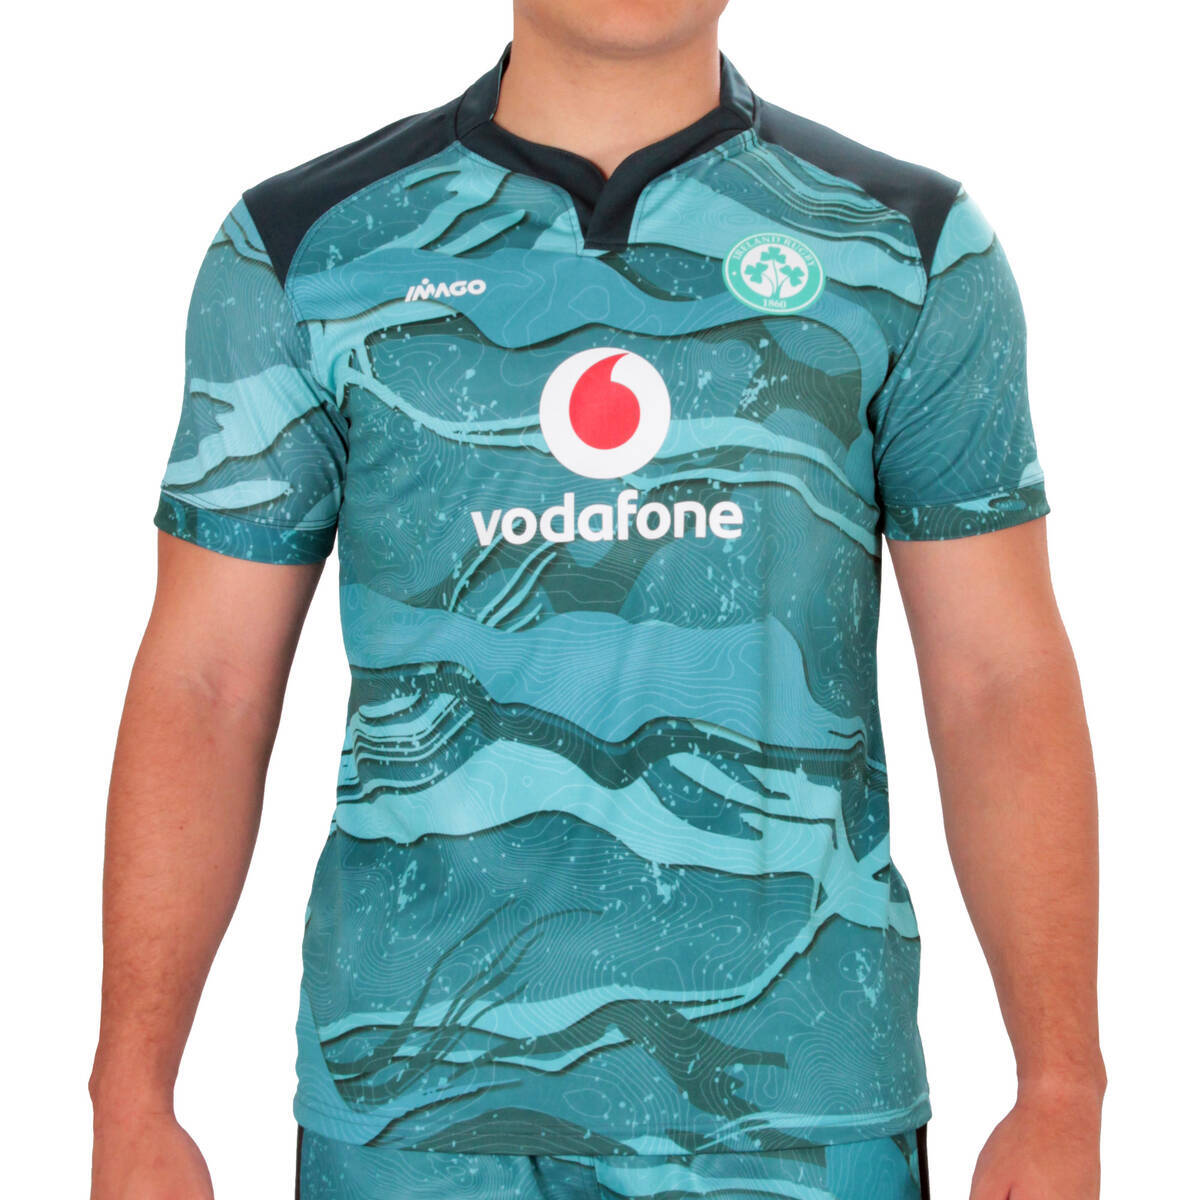 Imagen producto Camiseta Rugby Irlanda 6